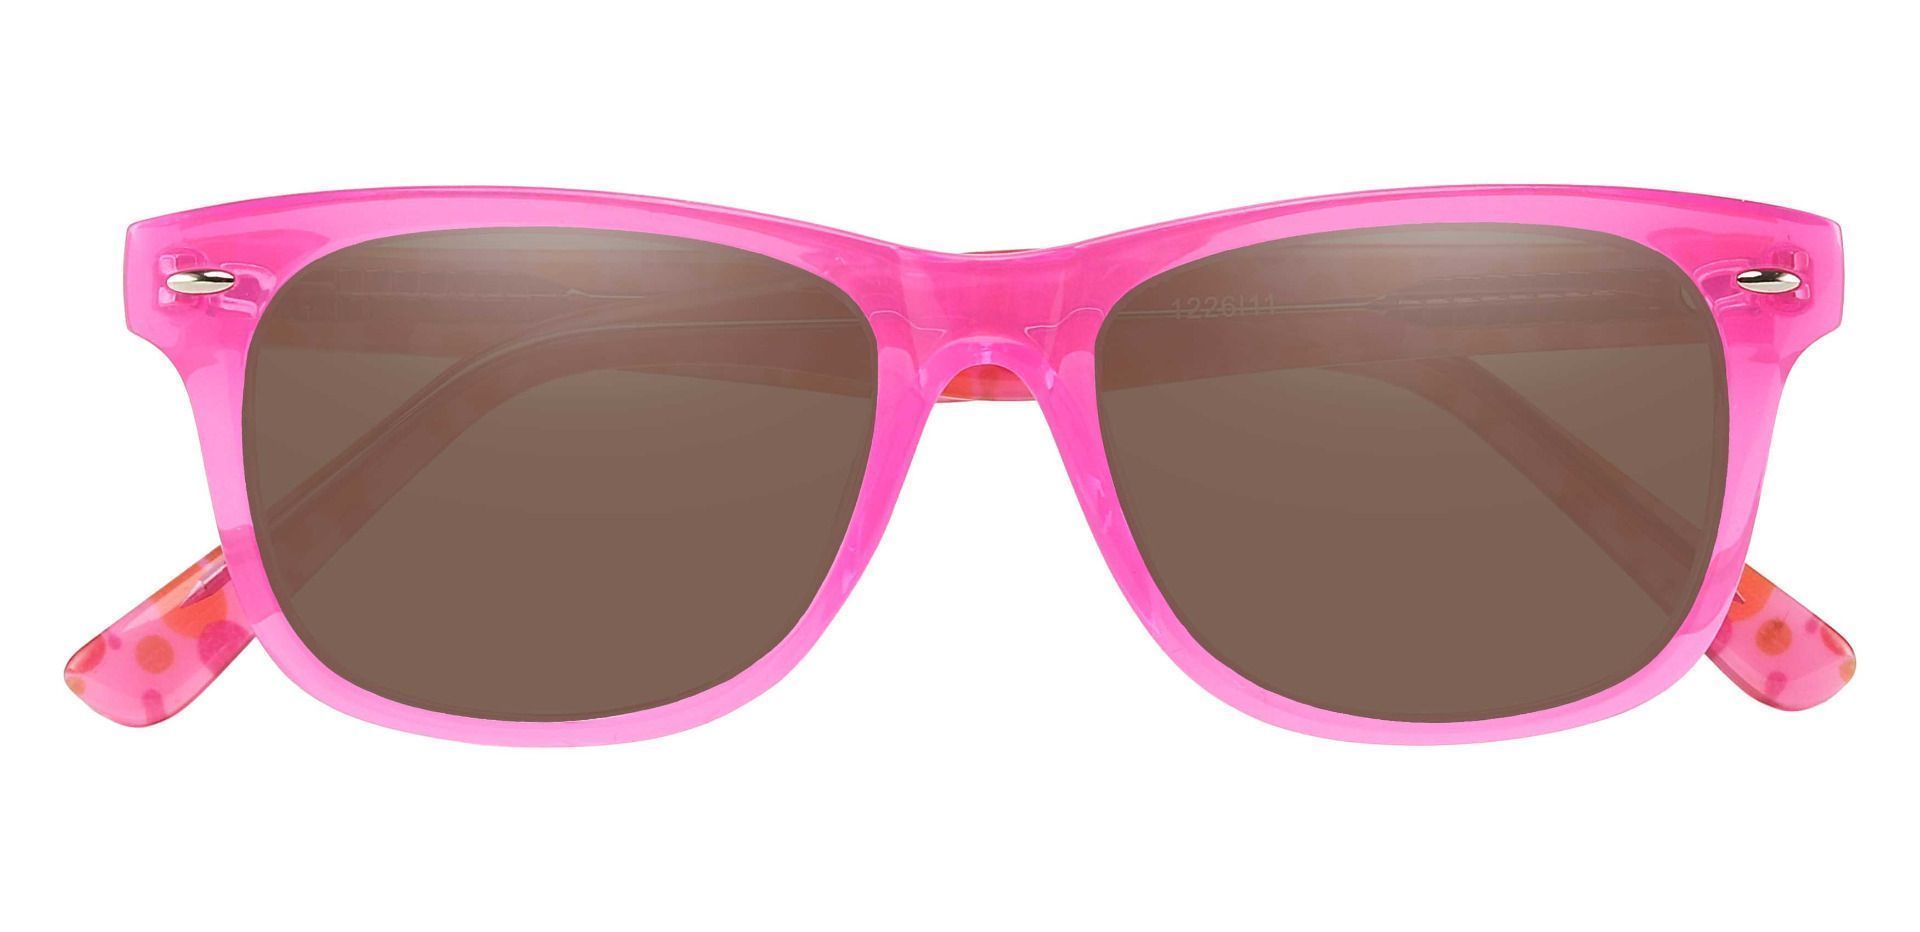 Eureka Square Progressive Sunglasses - Pink Frame With Brown Lenses